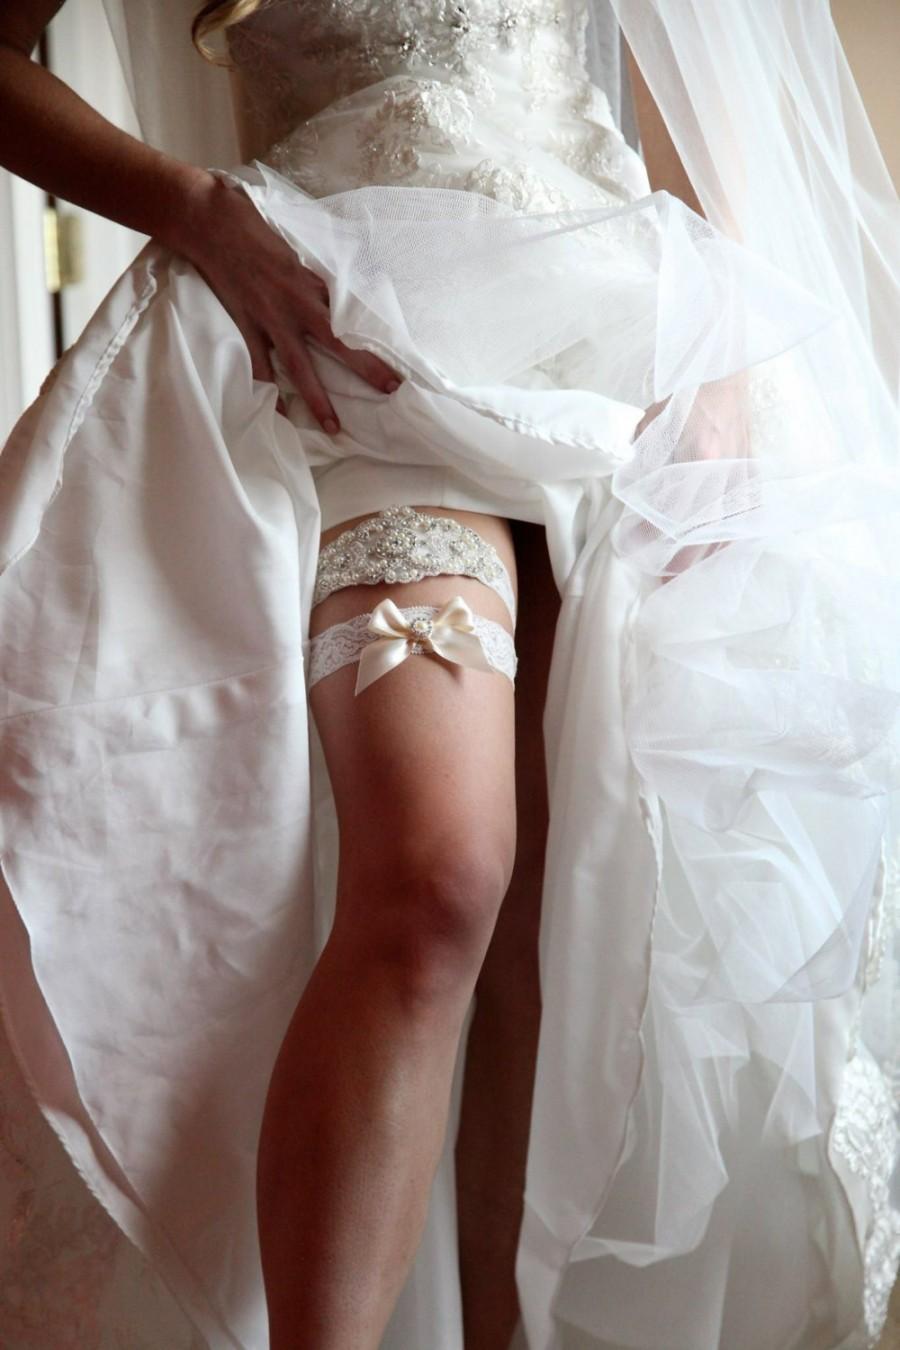 Wedding - SALE-Wedding Garter-Garter-Bridal garter-Ivory Lace-Rhinestone-Applique-Stretch lace-weddings-brides-garters-rhinestone applique-pearl